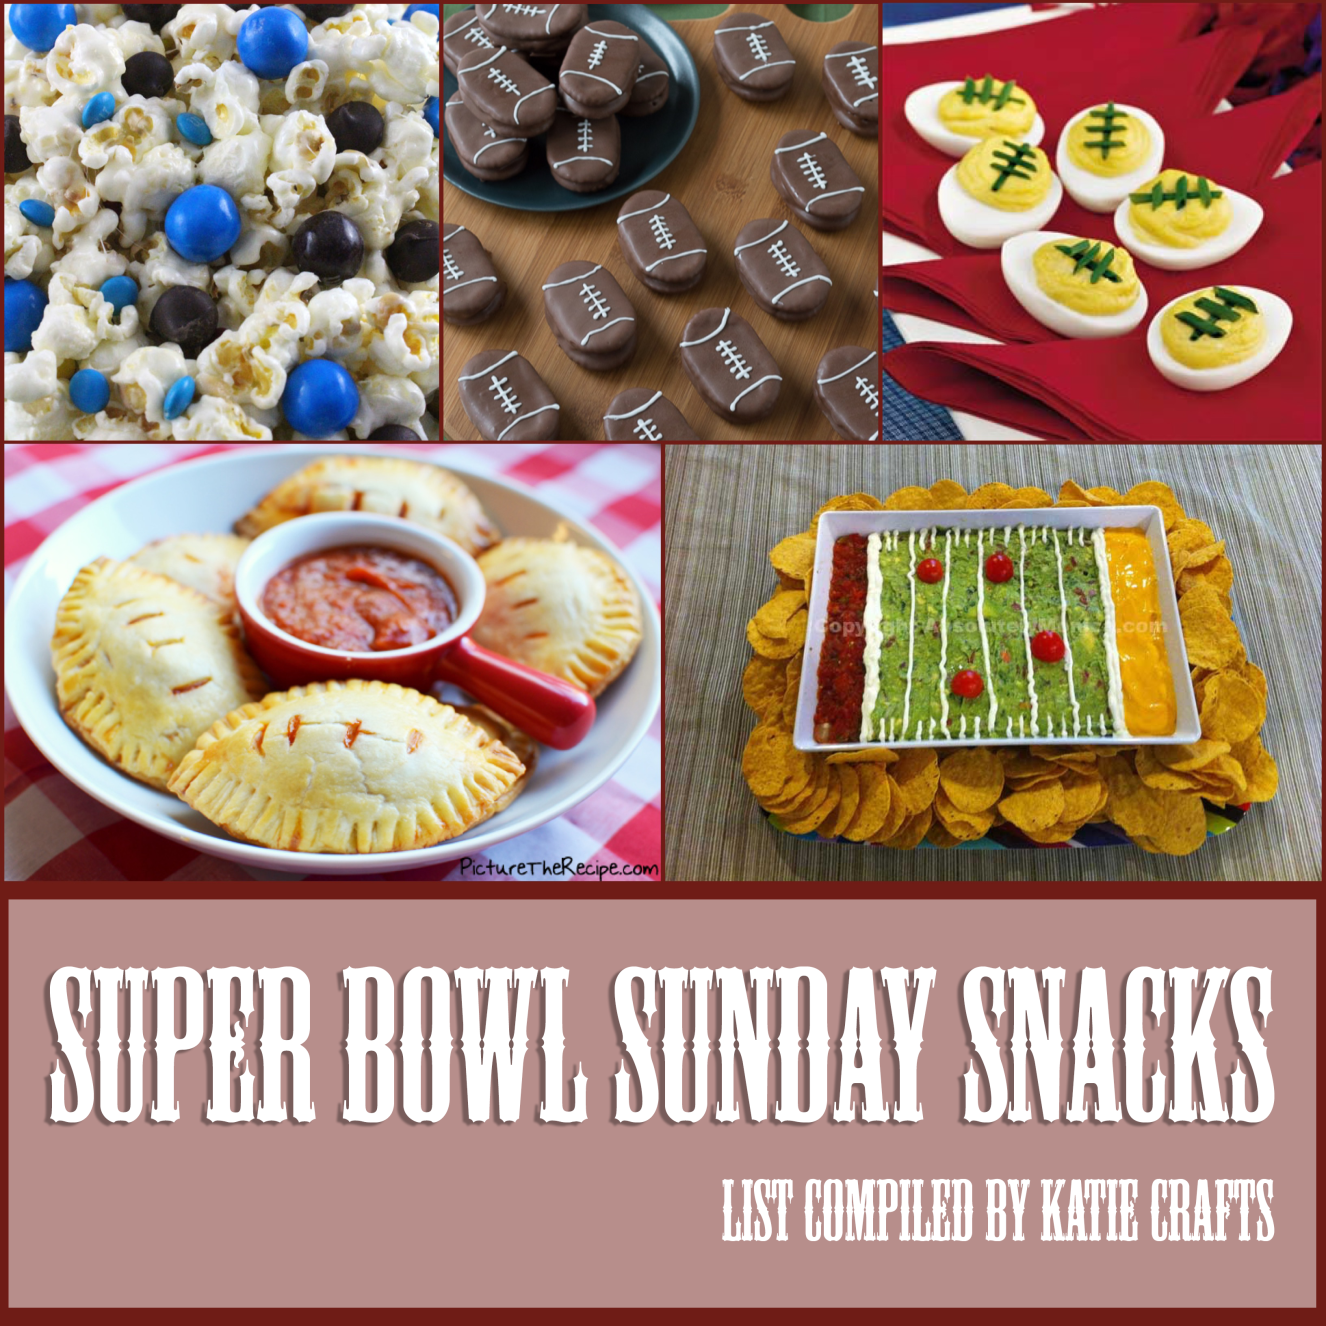 Super Bowl Sunday Snacks on Katie Crafts; https://www.katiecrafts.com